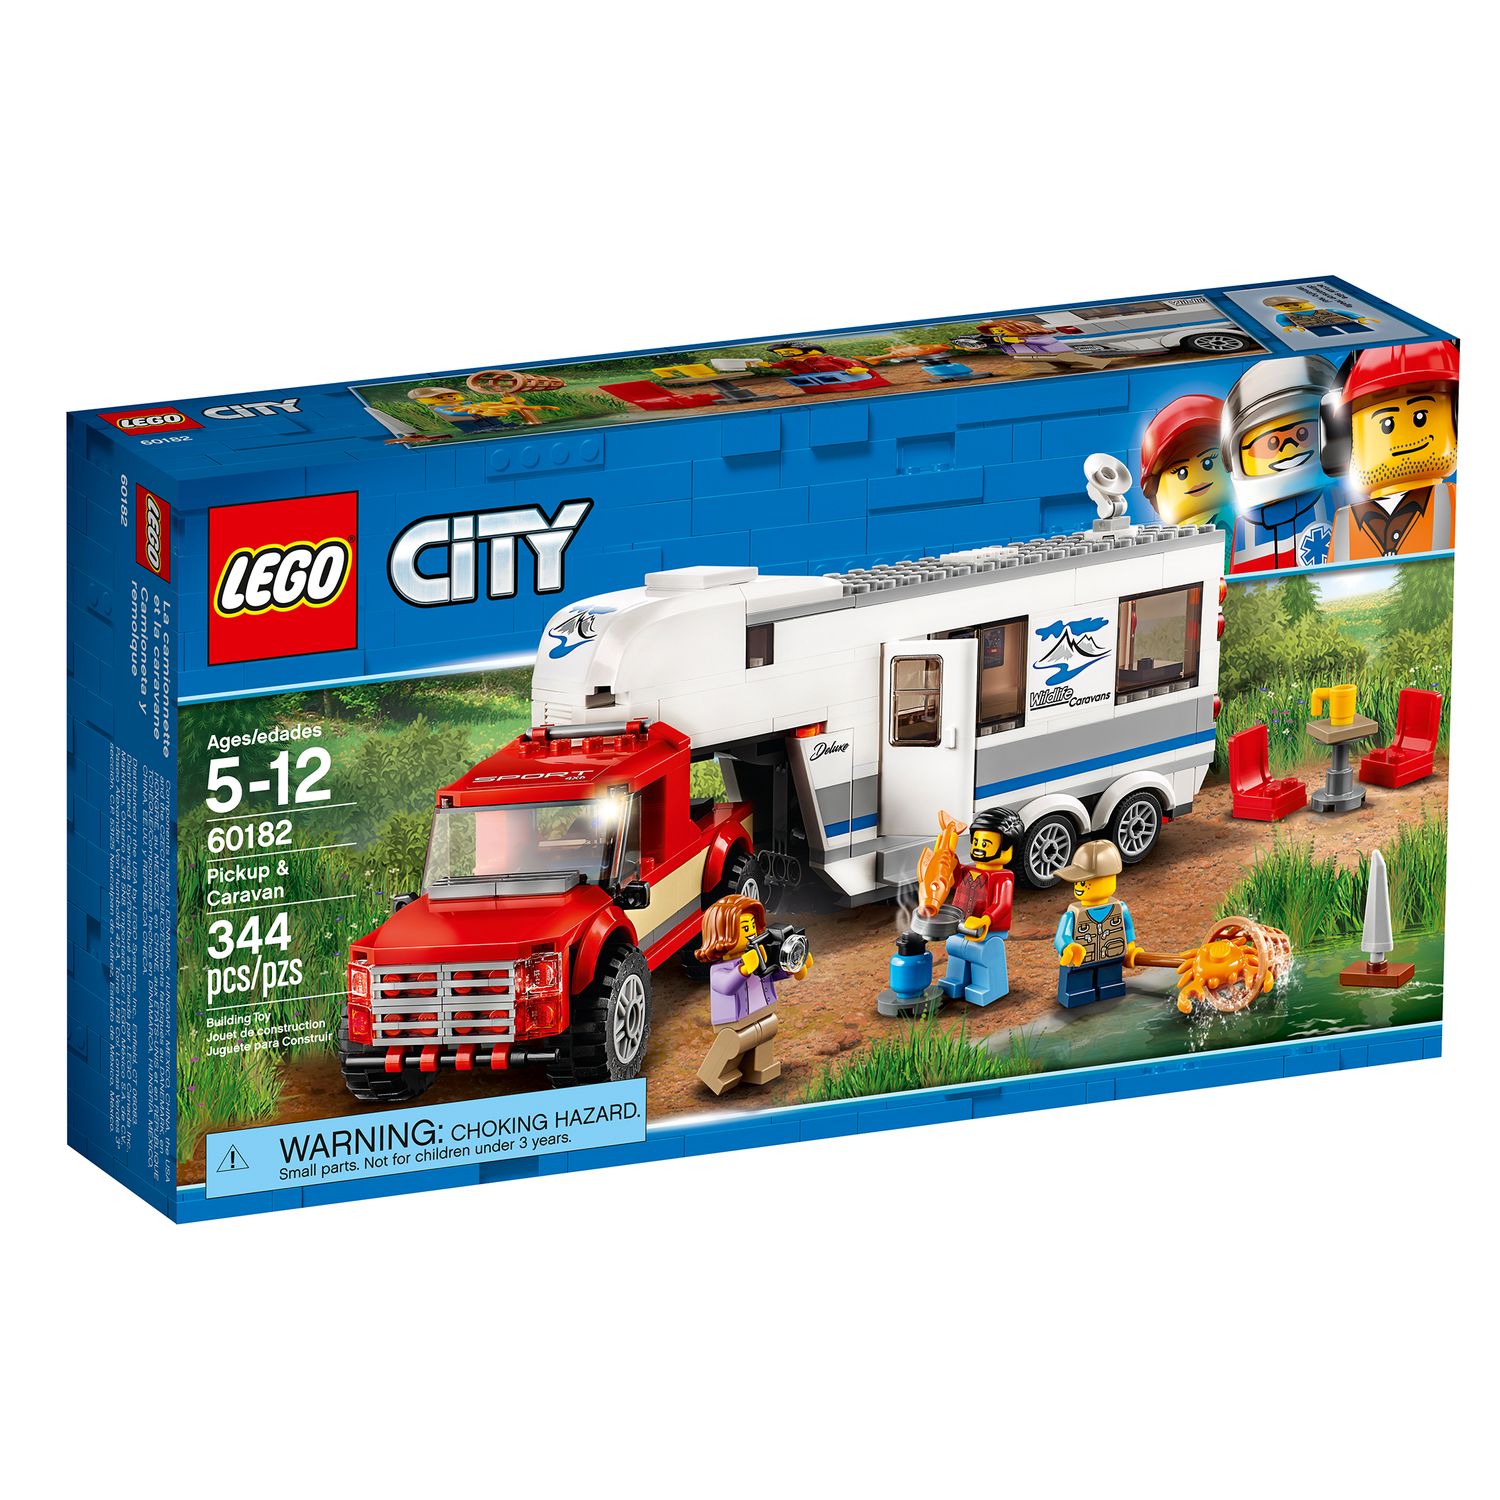 LEGO City Pickup \u0026 Caravan Set 60182